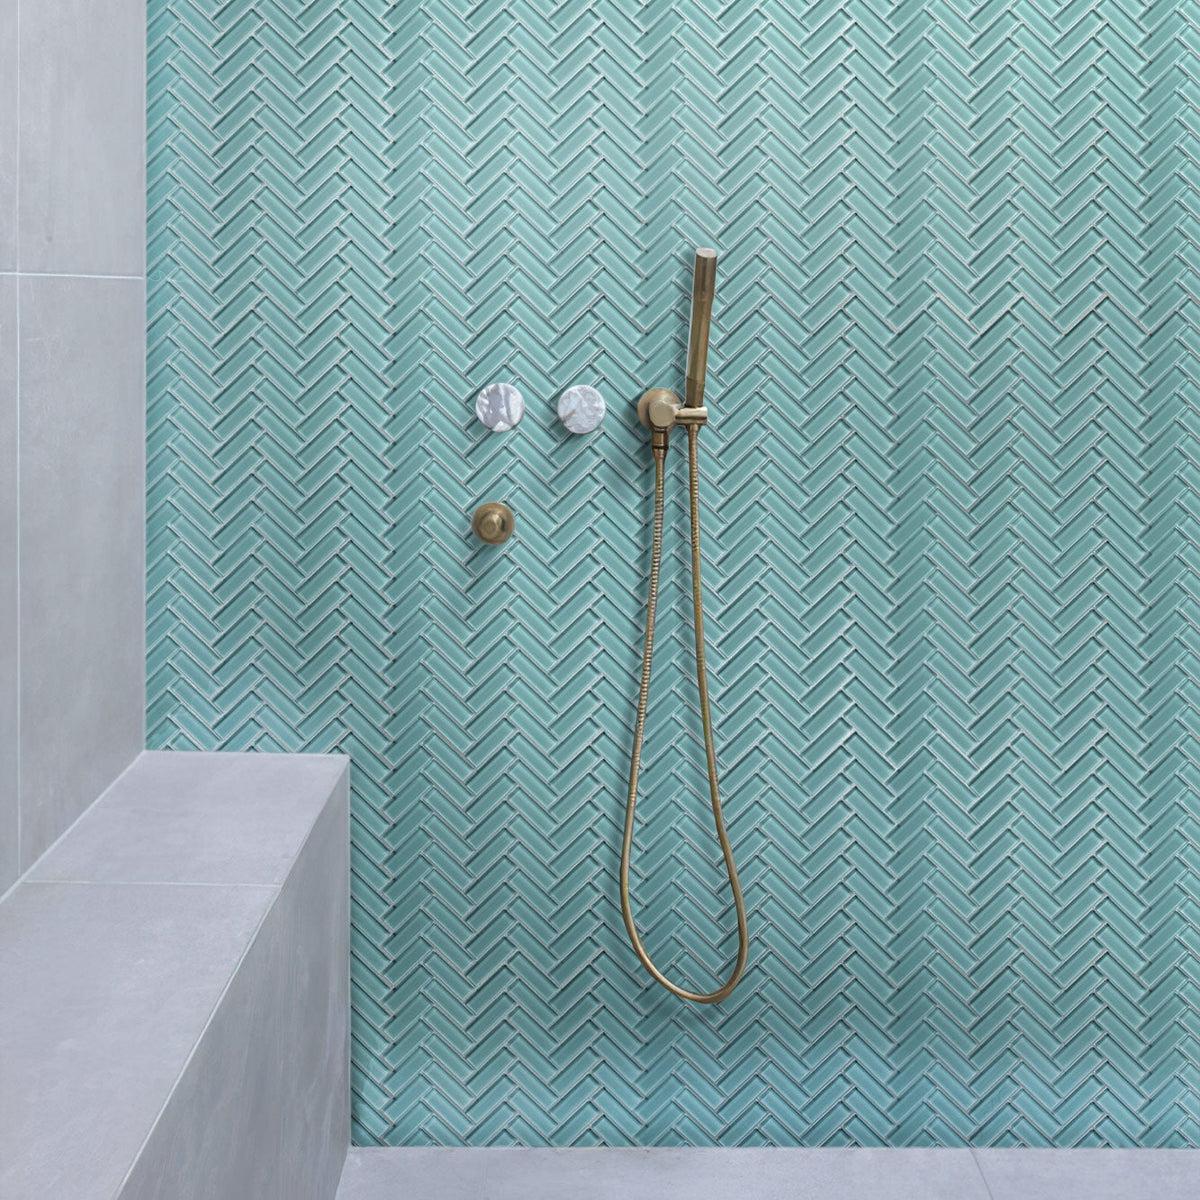 Turquoise Herringbone Glass Tile shower backsplash